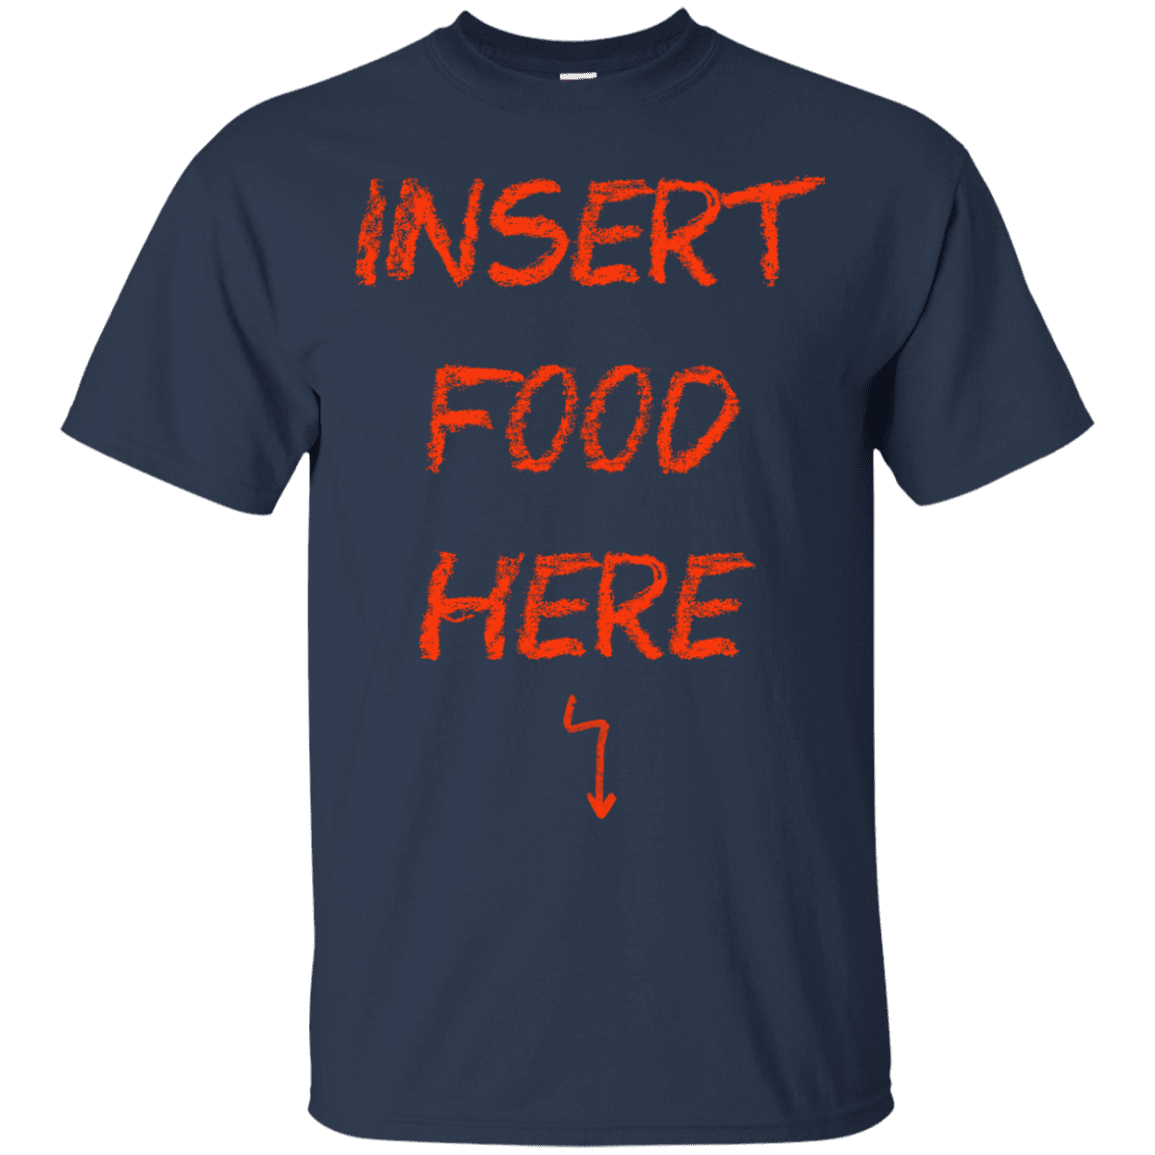 T-Shirts Navy / S Insert Food T-Shirt